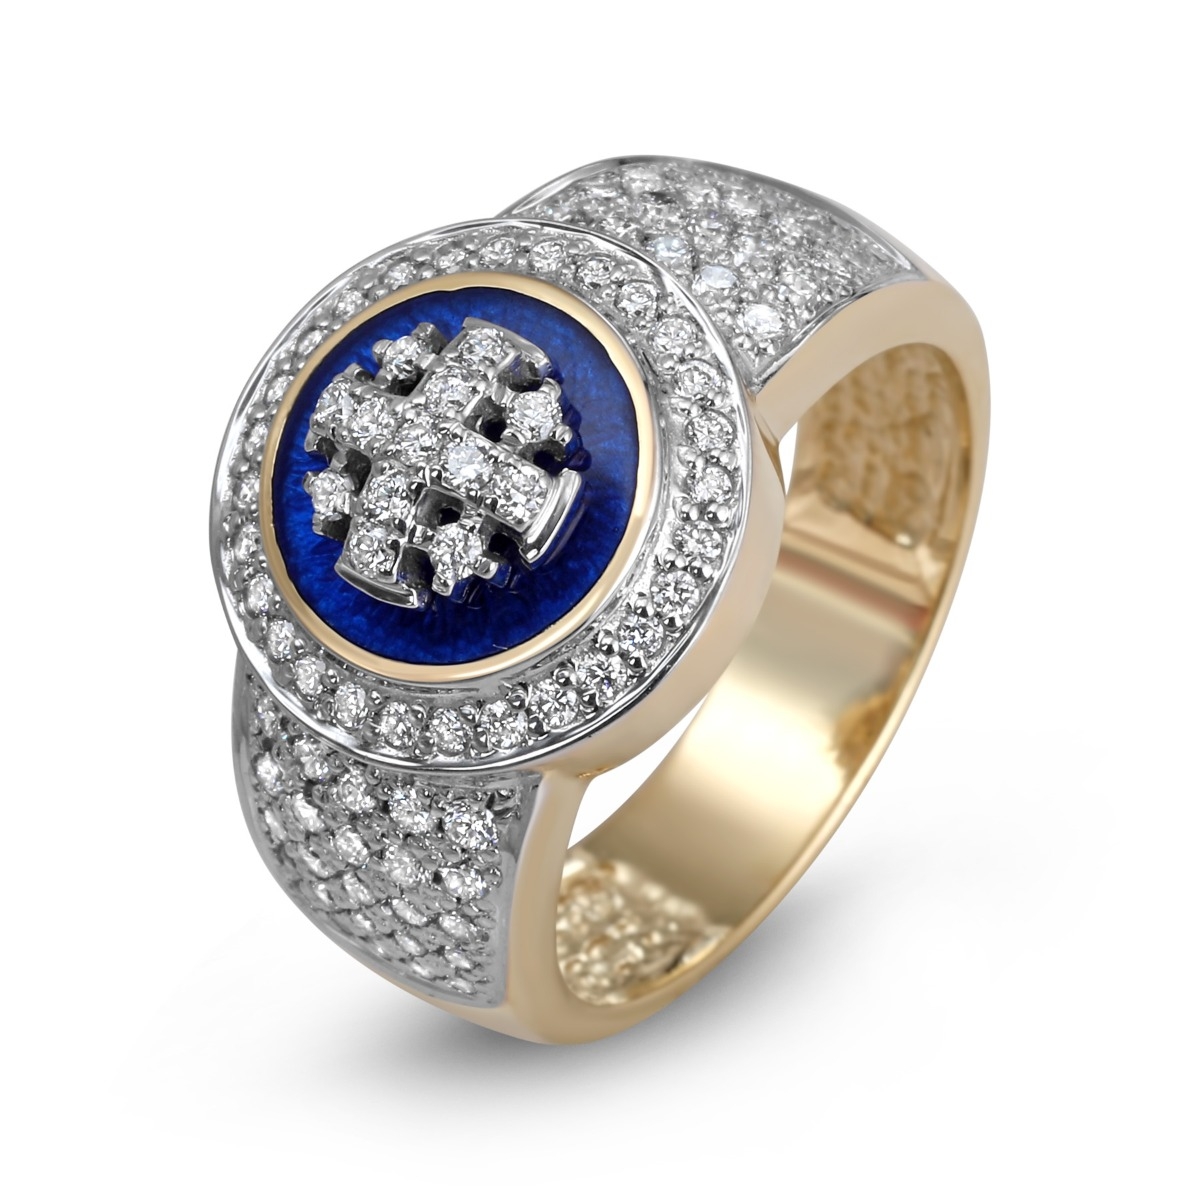 Anbinder Jewelry Two-Tone 14K Gold Enamel and Diamond Paved Jerusalem Cross Halo Signet Ring - 1